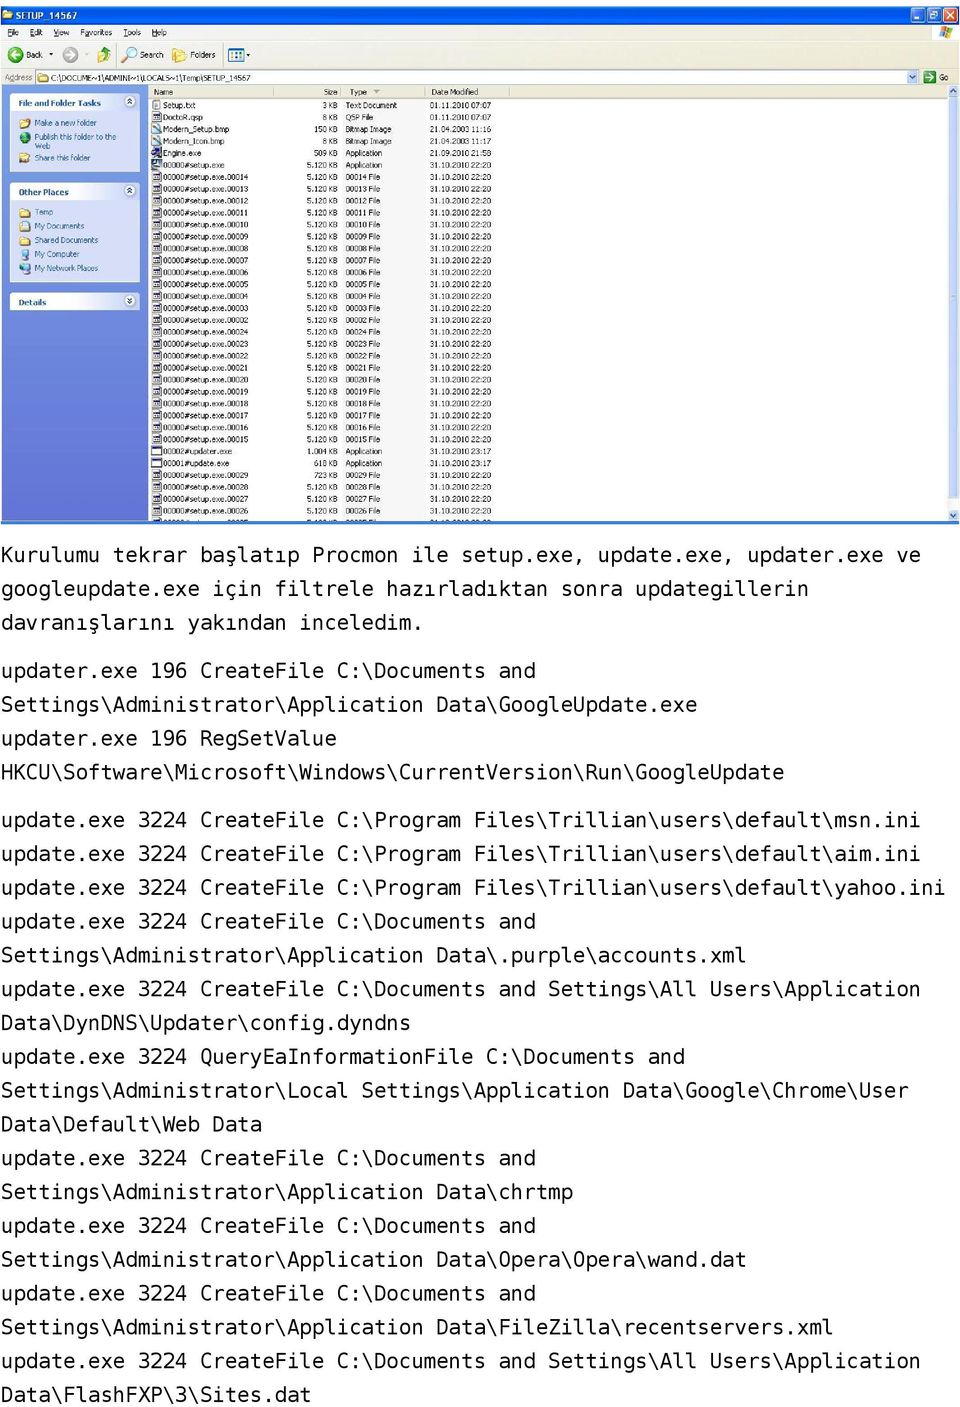 exe 3224 CreateFile C:\Program Files\Trillian\users\default\aim.ini update.exe 3224 CreateFile C:\Program Files\Trillian\users\default\yahoo.ini Settings\Administrator\Application Data\.